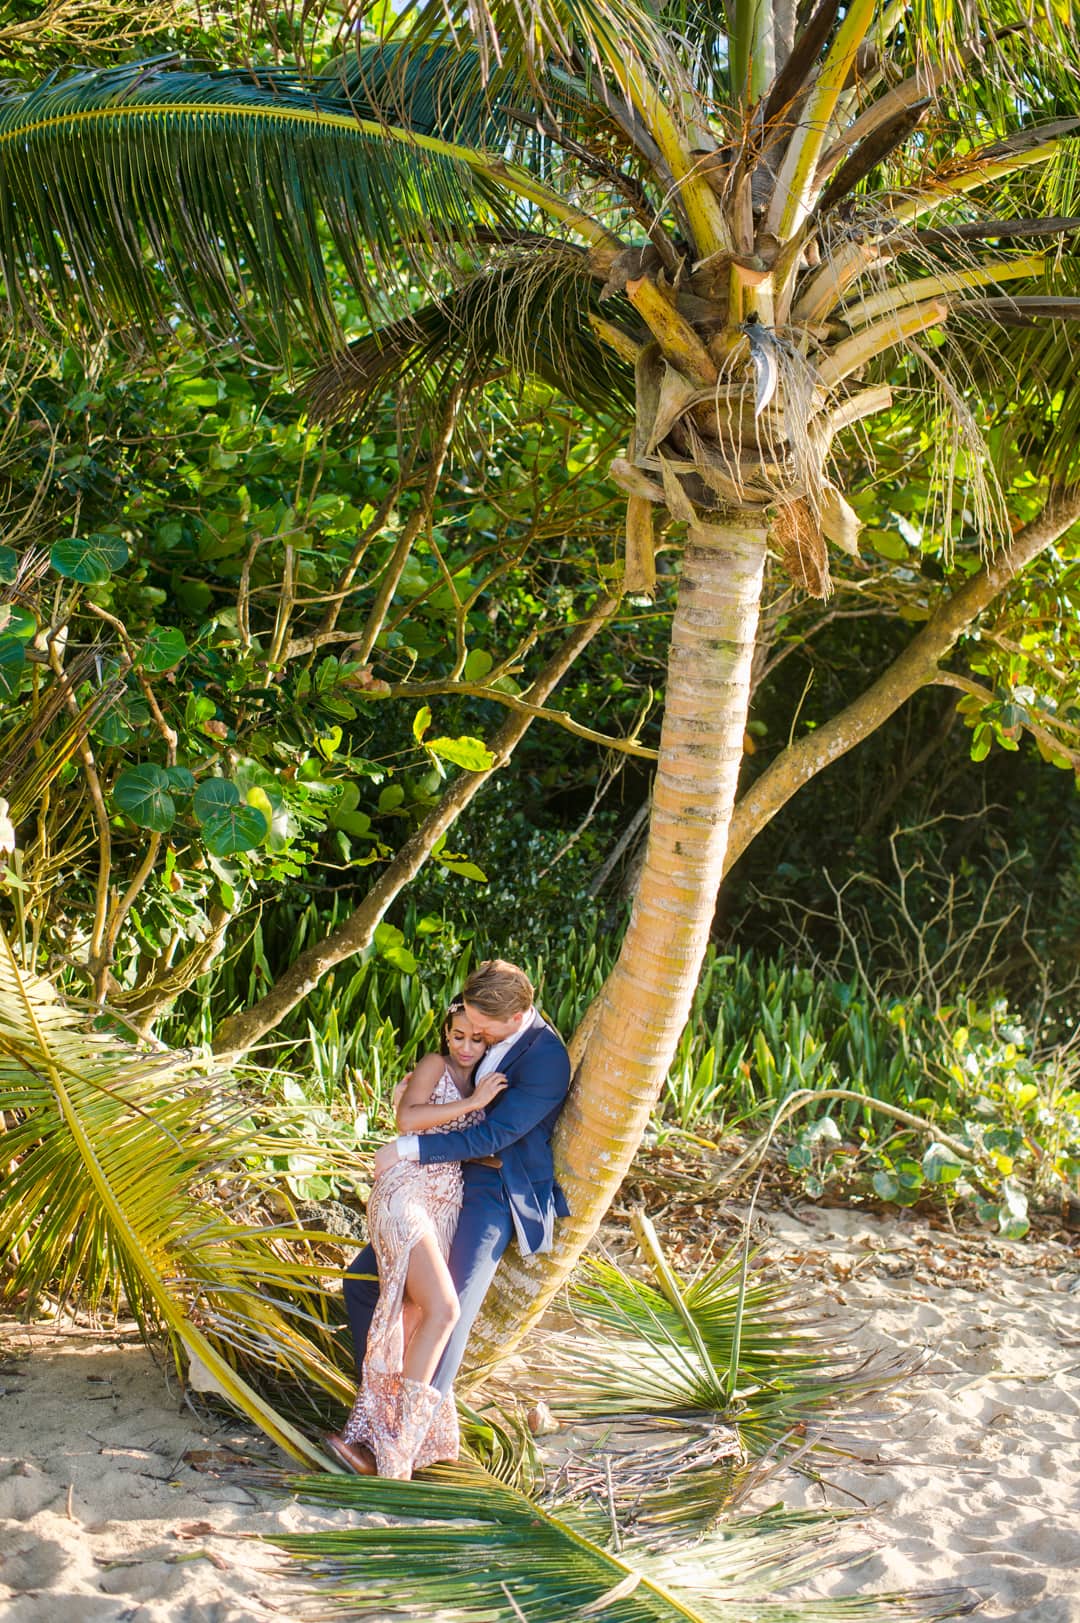 elopement photography in borinquen beach aguadilla puerto rico by wedding photographer camille fontanez